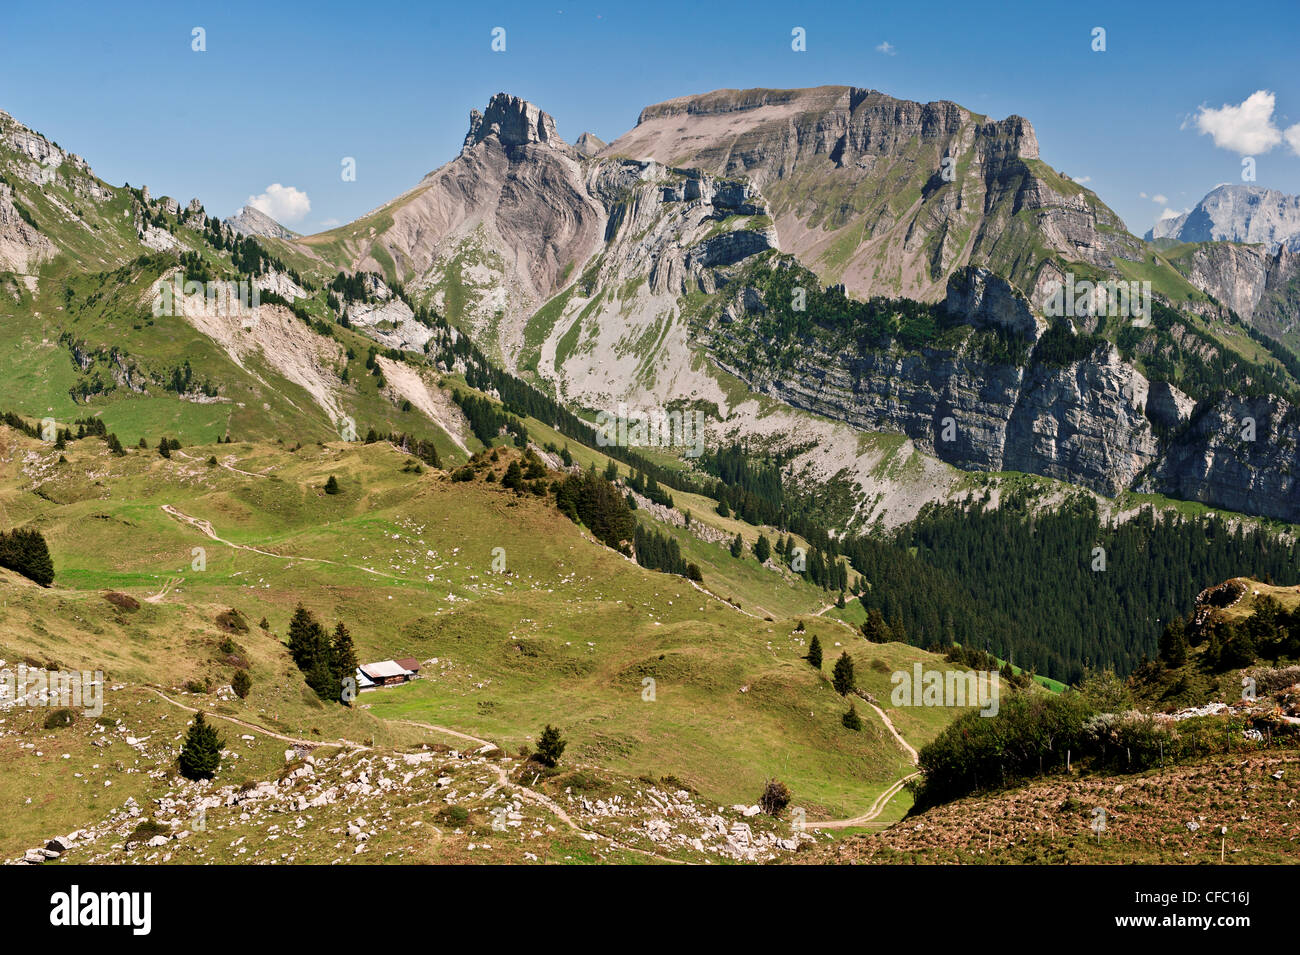 Alp, Alpes, pastizales alpinos, paisaje montañoso paisaje montañoso, paisaje de montaña, mountainscape, Alpes Bernese Oberland, Alp Foto de stock